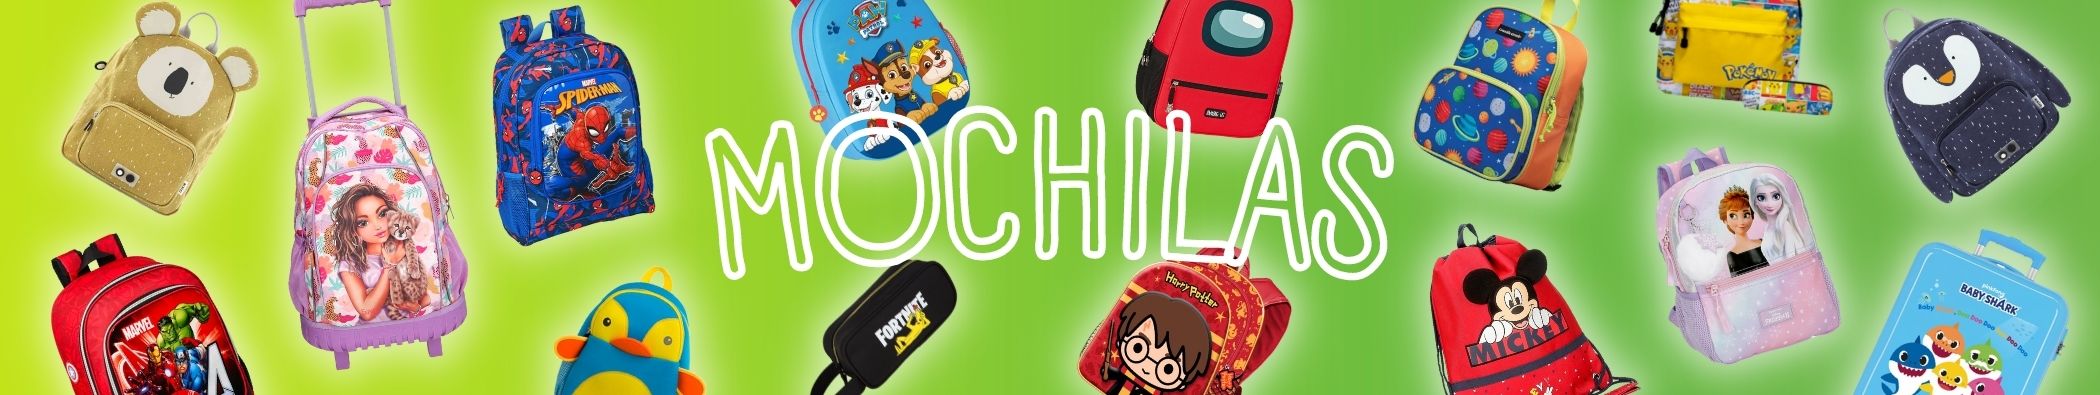 virtud provocar morir Comprar Mochilas Online | JOGUIBA Tienda de juguetes